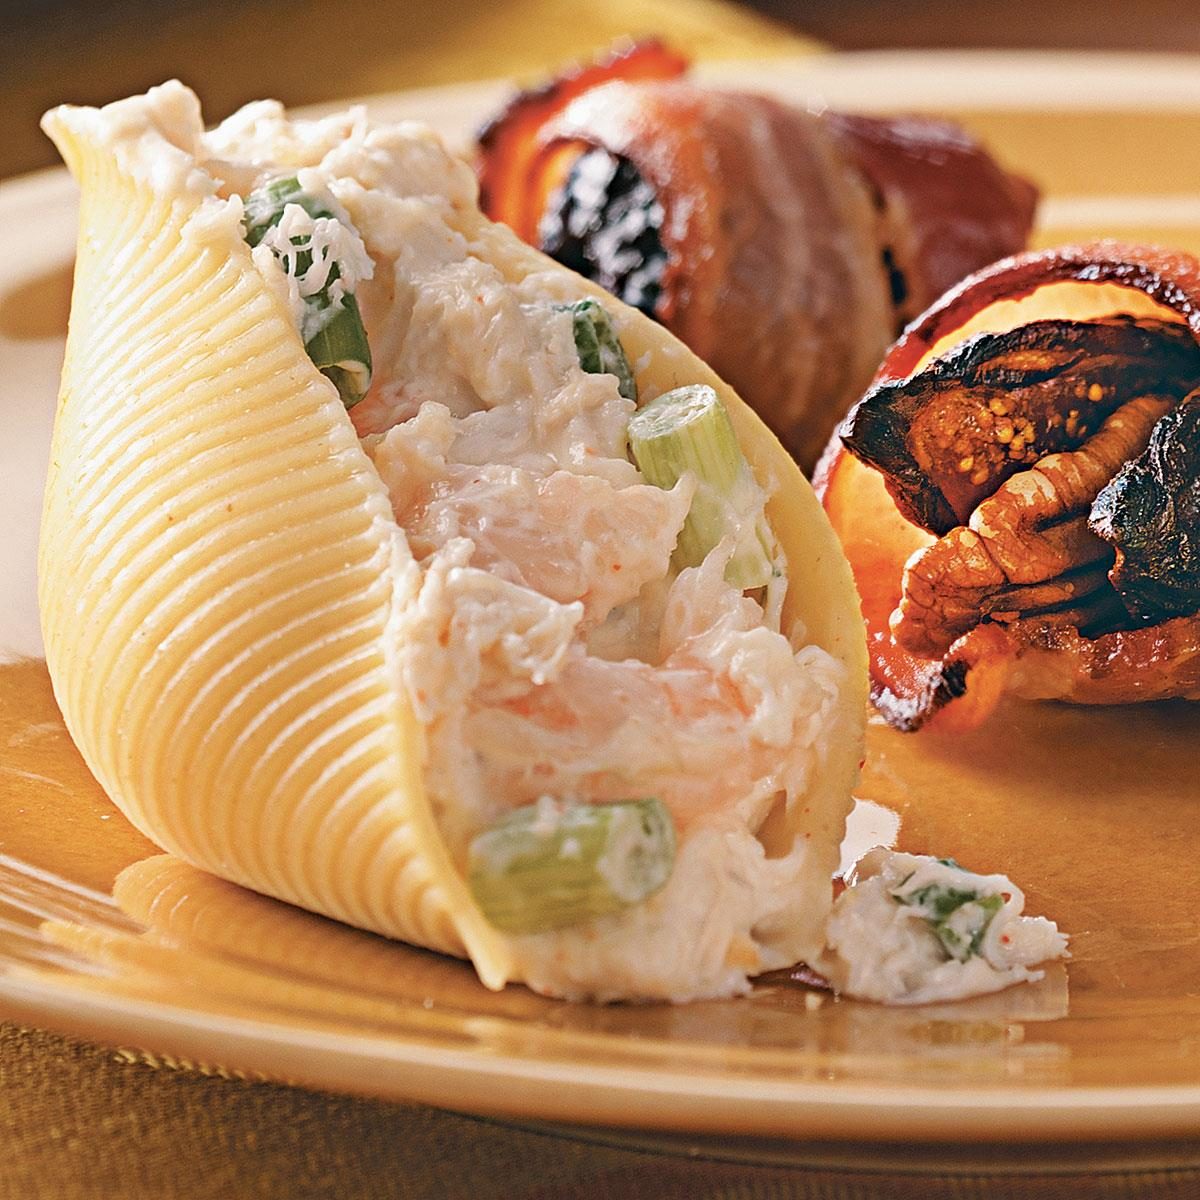 Creamy Seafood-Stuffed Shells Recipe